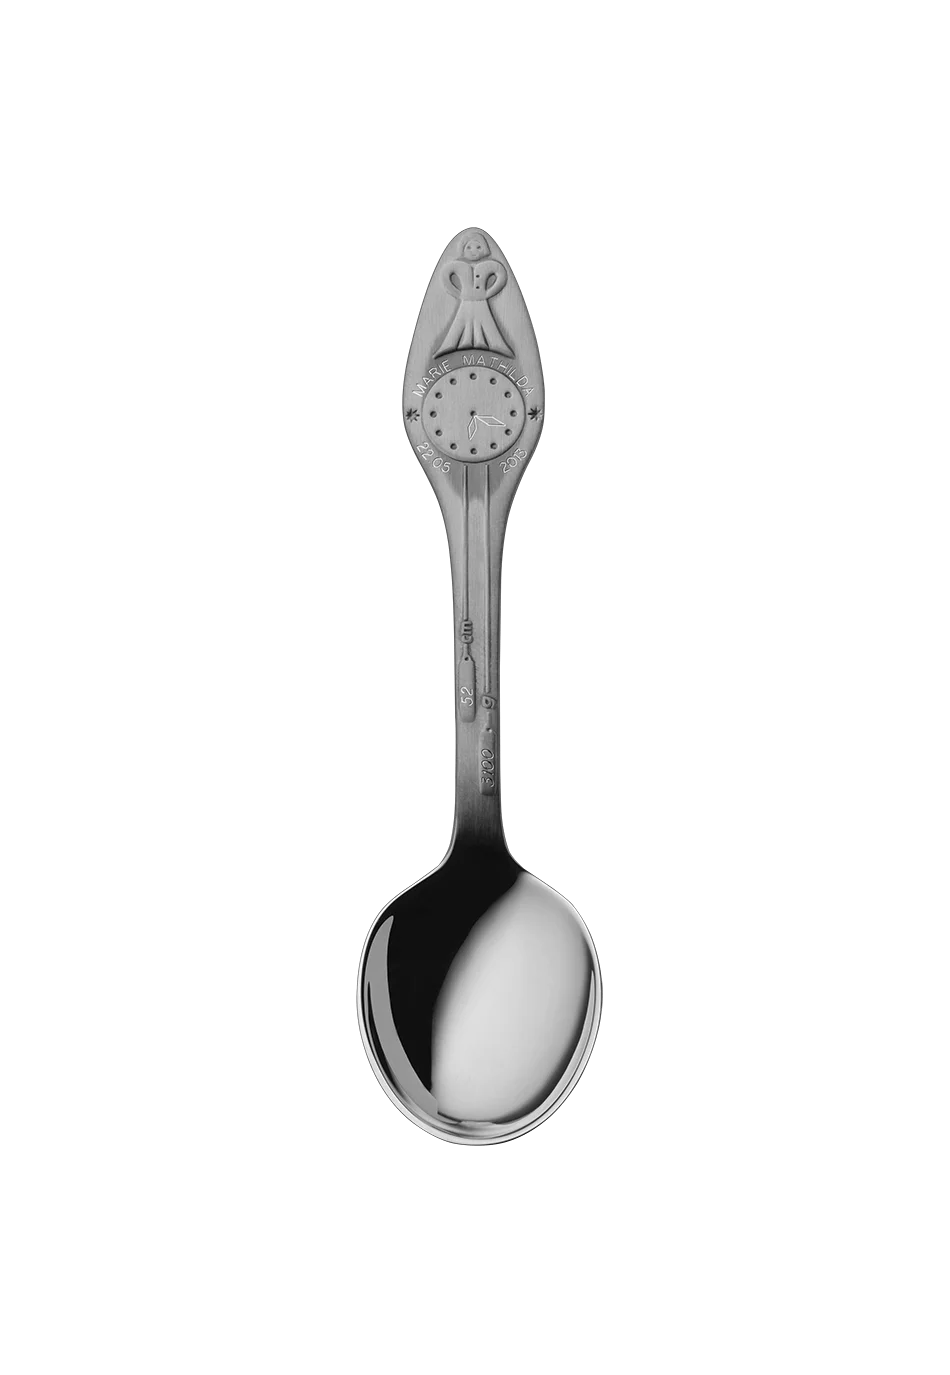 Birth Spoon Girl  (150g massive silverplated)